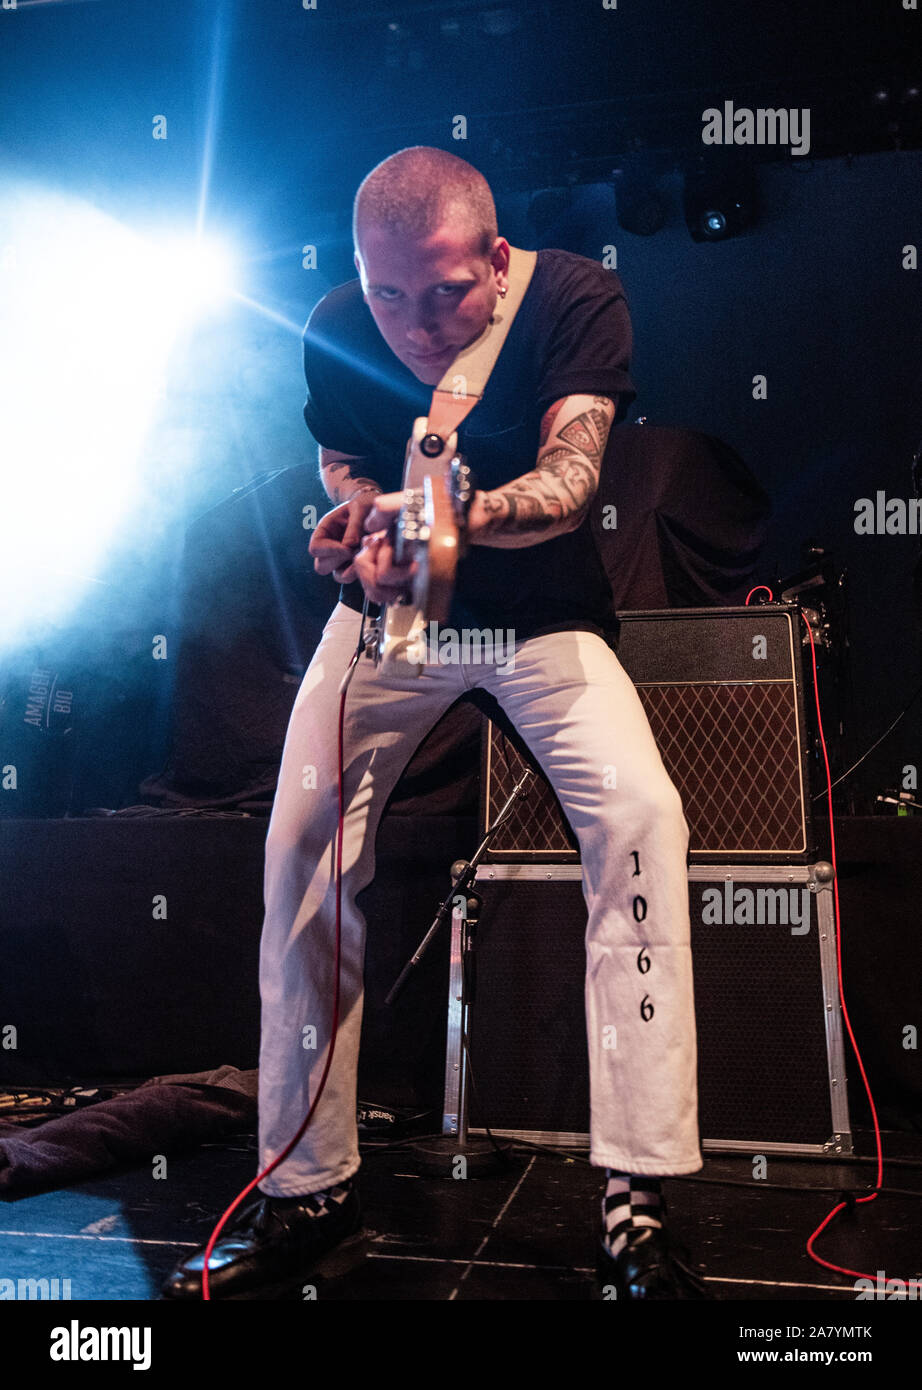 Copenhagen, Denmark. 03rd, November 2019. The English rock band Kid Kapichi performs a live concert at Amager Bio in Copenhagen. (Photo credit: Gonzales Photo - Joe Miller). Stock Photo